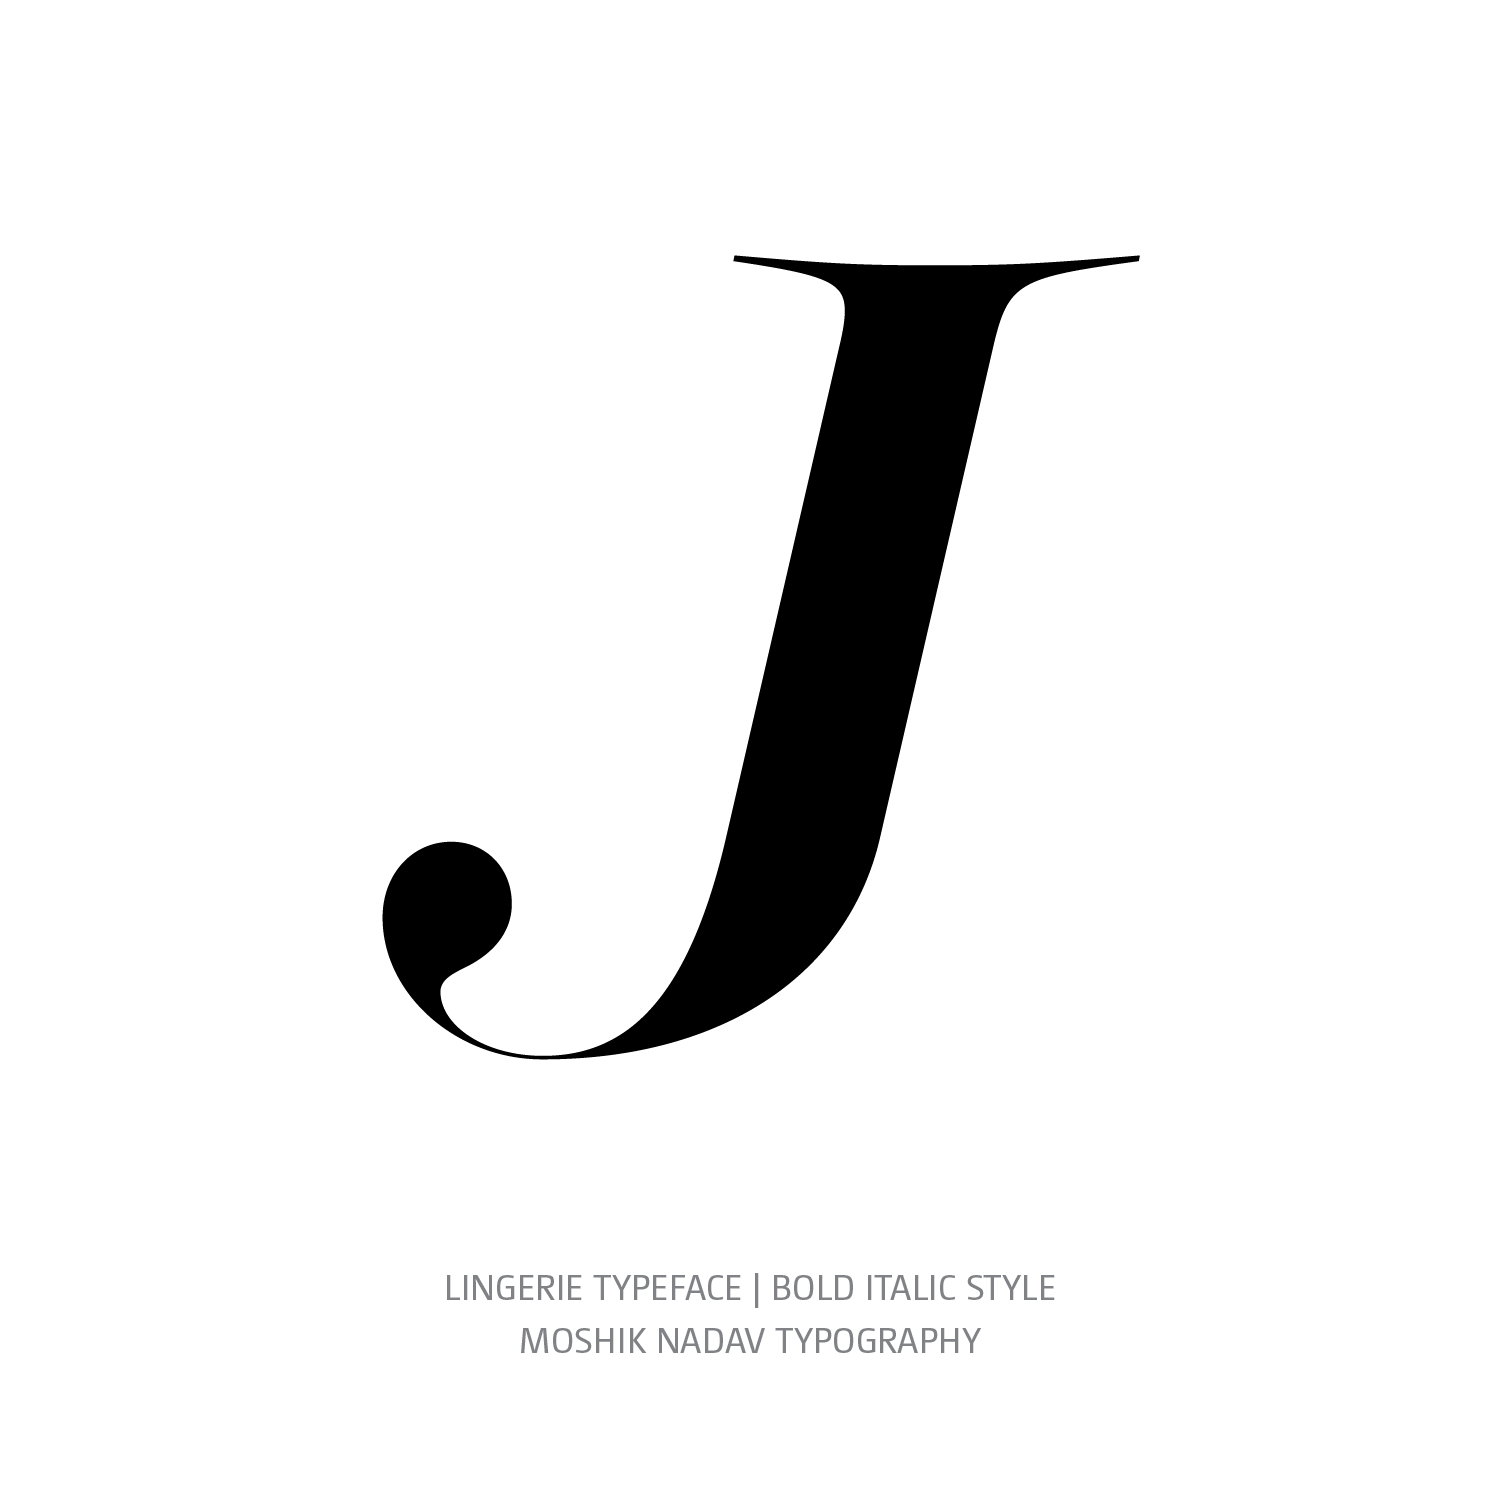 Lingerie Typeface Bold Italic J